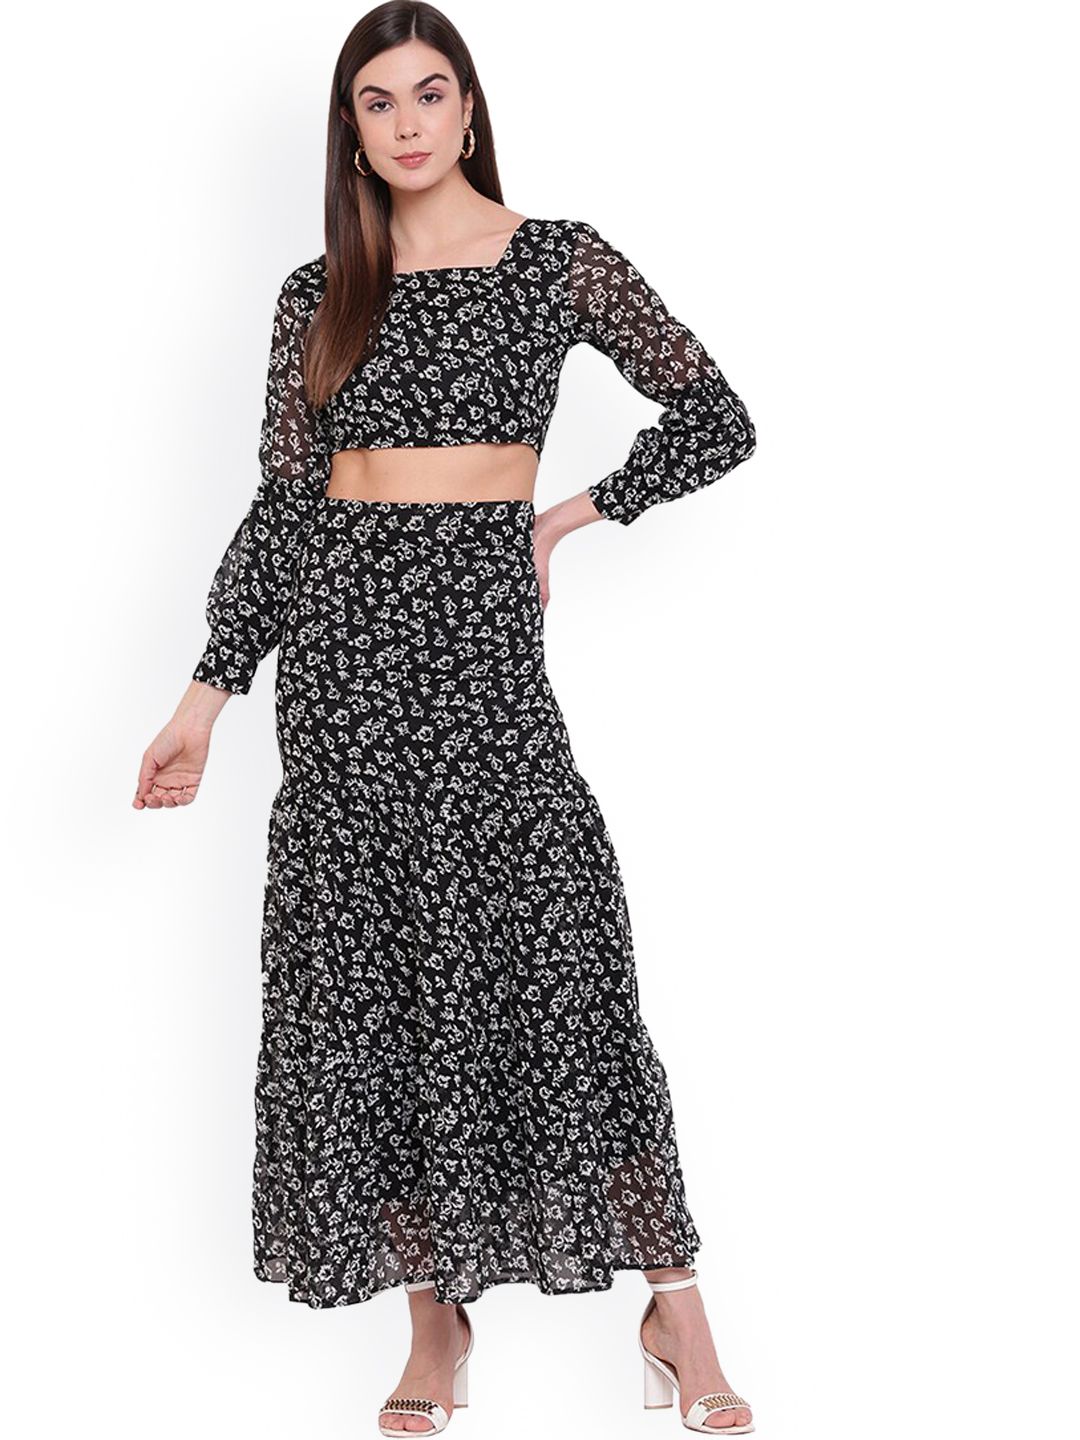 Ashnaina Women Black & White Printed Top & Skirt Set Price in India